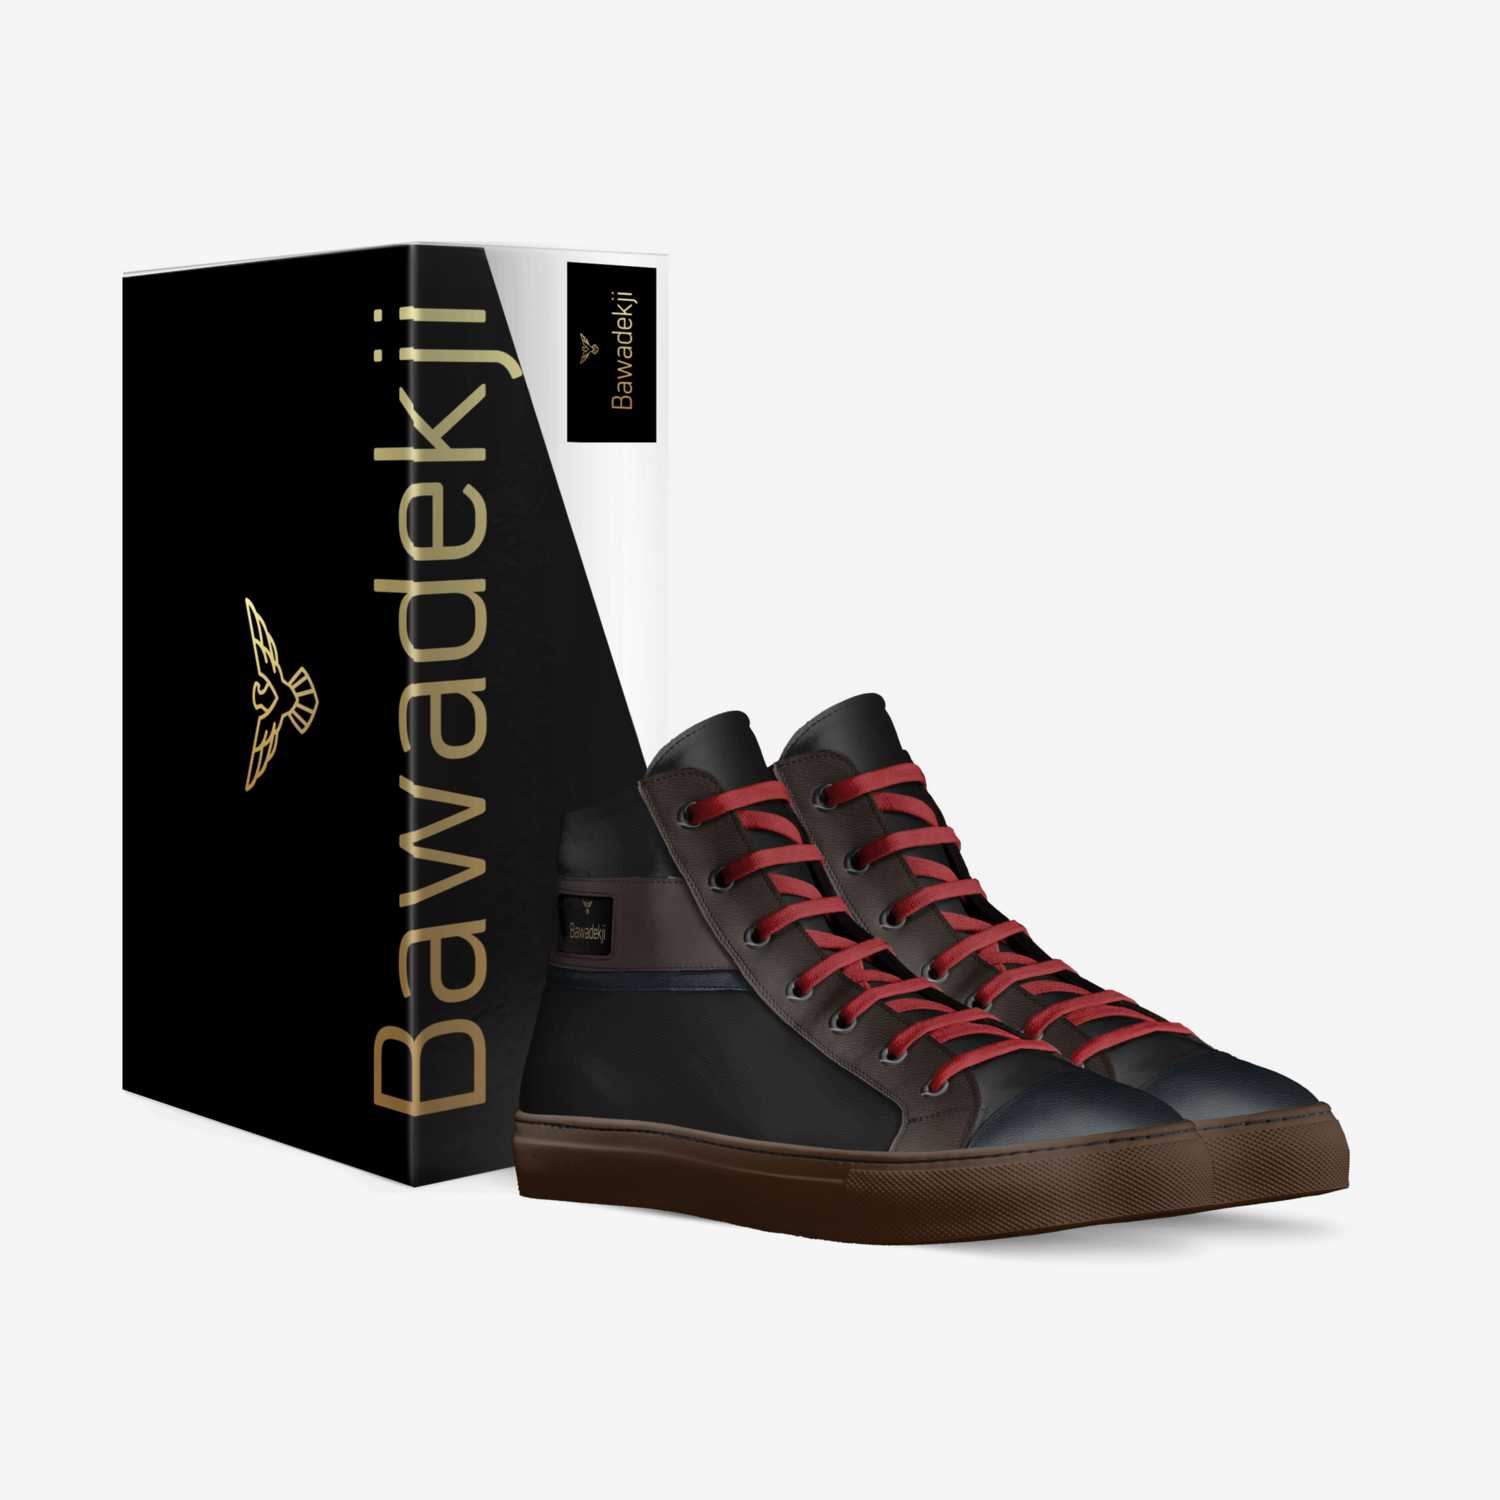 Bawadekji custom made in Italy shoes by Ahmad Bawadekji | Box view